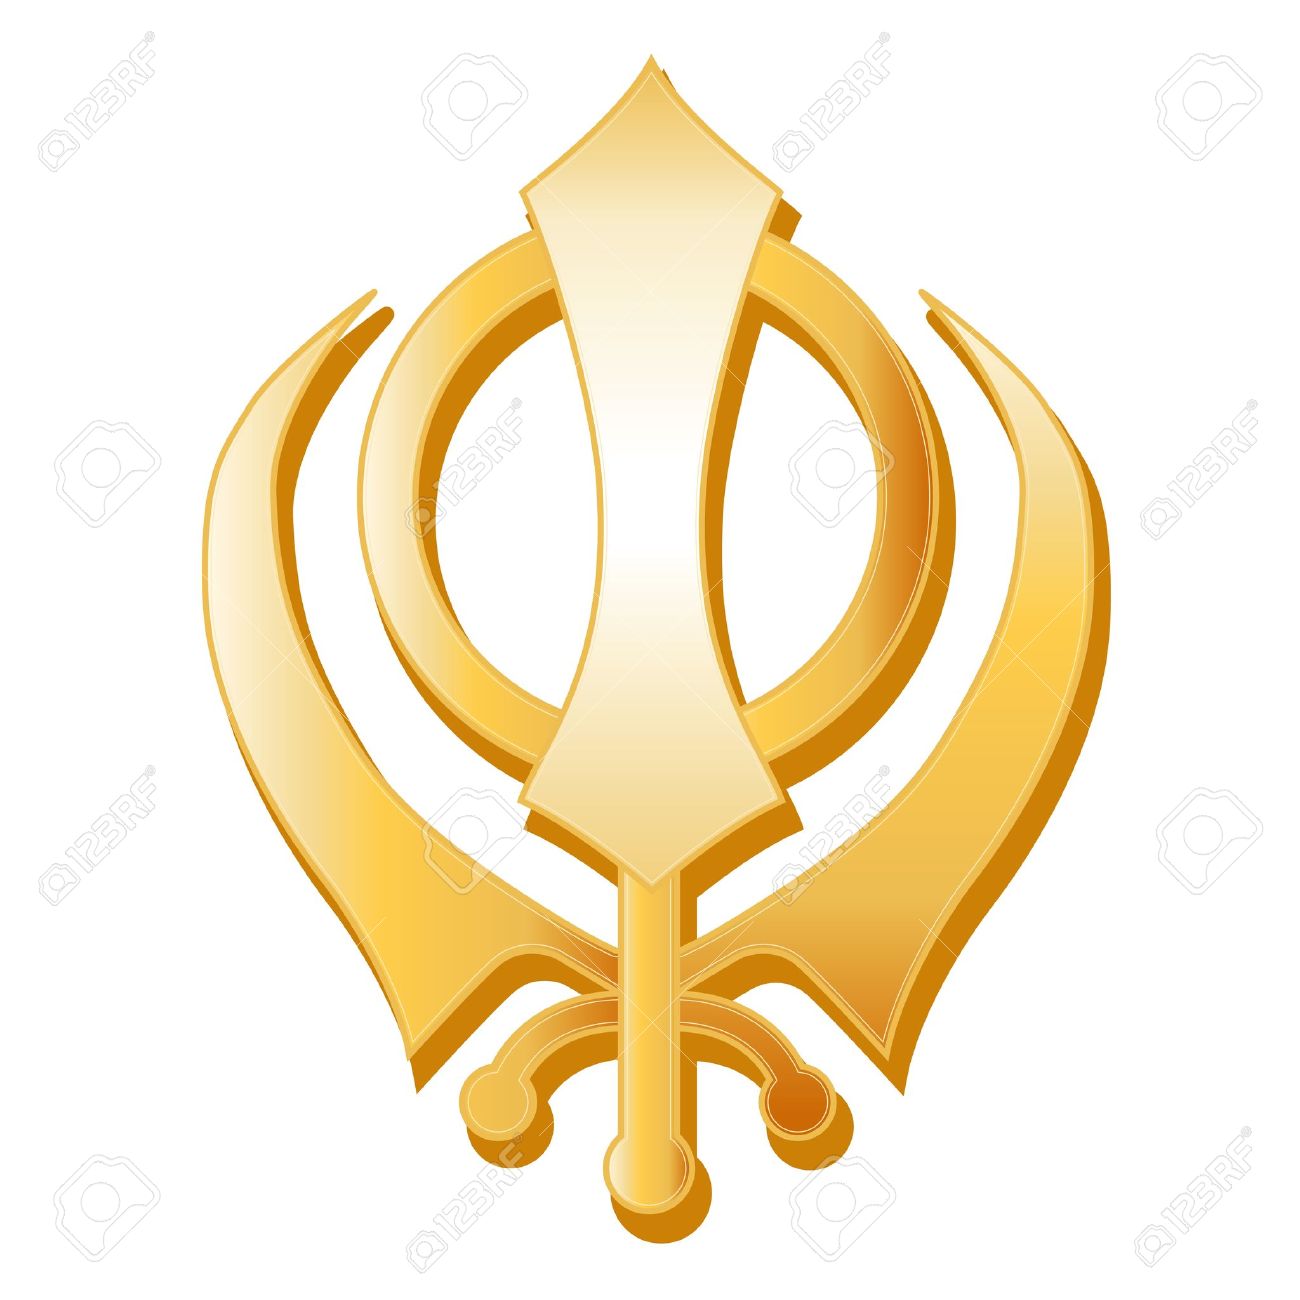 741 Sikhism Stock Illustrations, Cliparts And Royalty Free Sikhism.